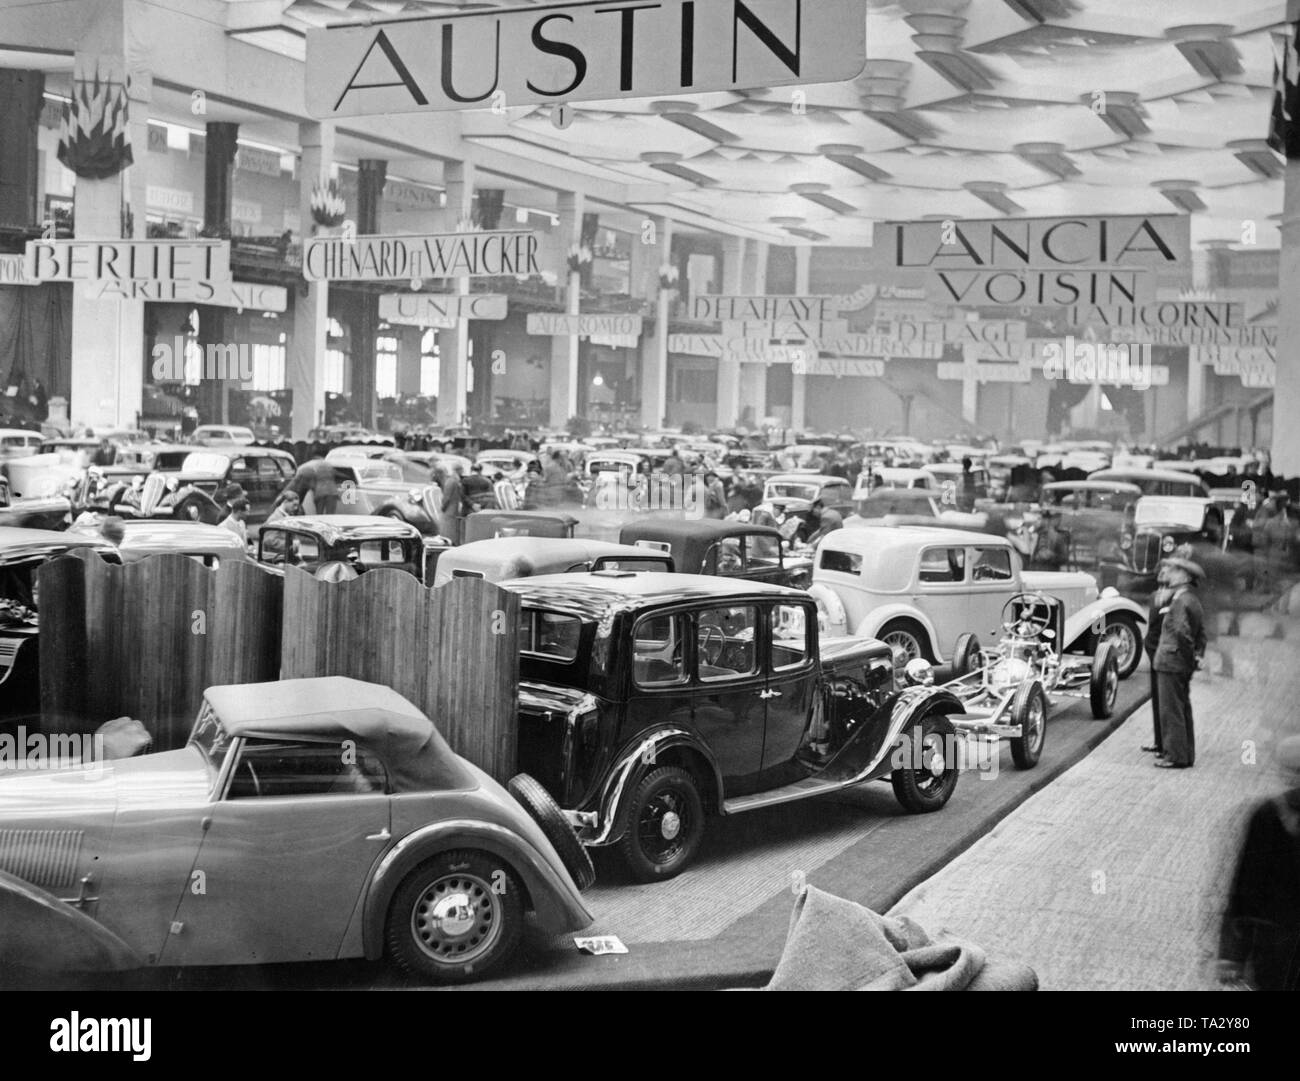 Exhibition area of Austin at the Paris Motor Show 1935. Stock Photo